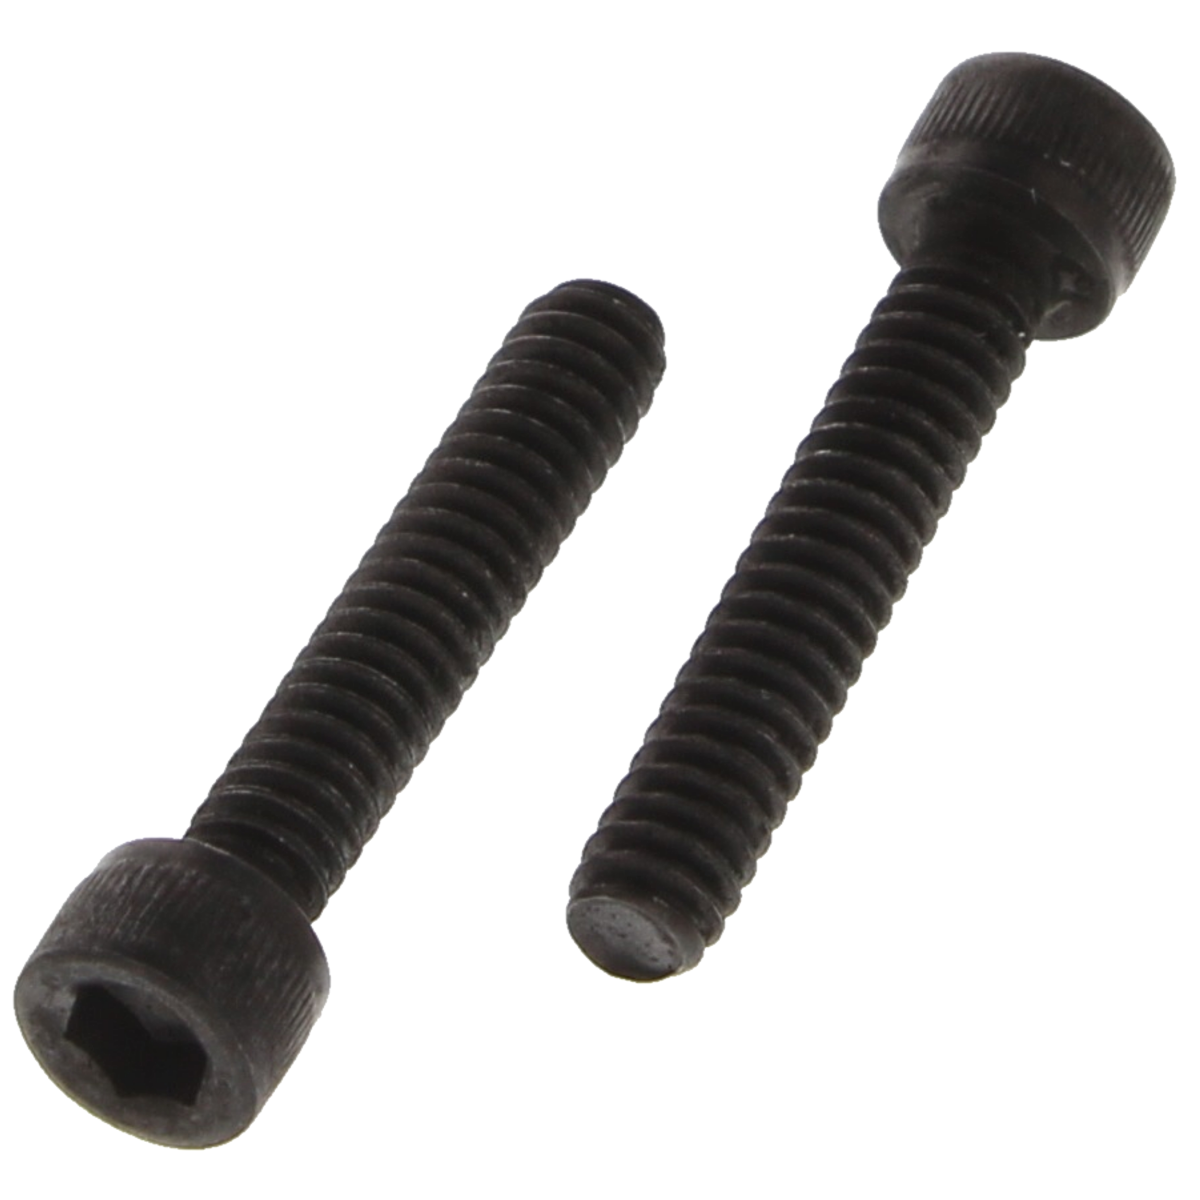 #2-56 x 1/2" Socket Head Cap Screws — Alloy Steel Heat Treated, Coarse Thread, Black Oxide, 100/PKG